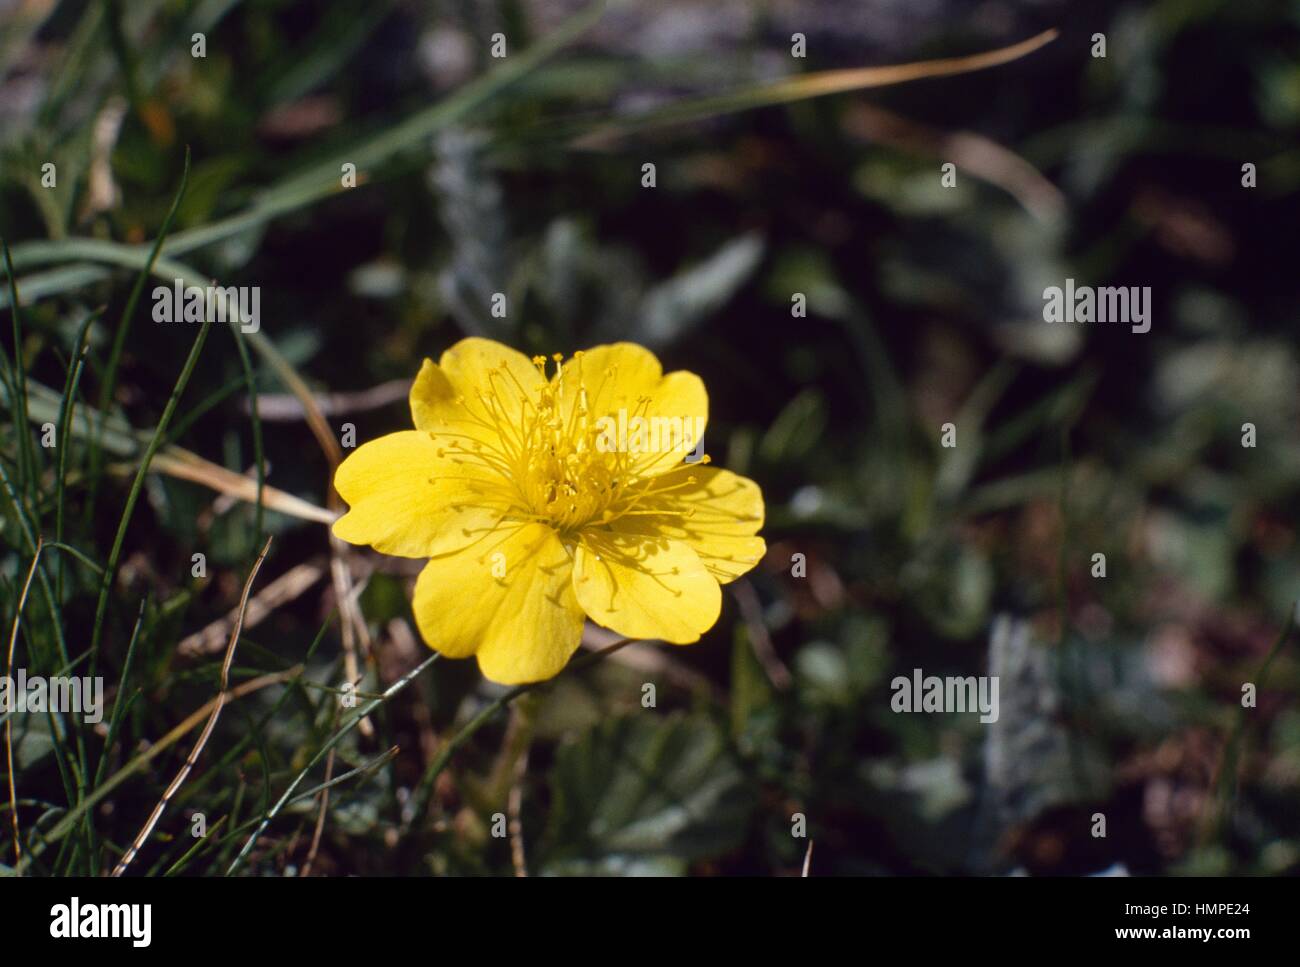 Potentille jaune nain (Potentilla aurea), Rosaceae. Banque D'Images